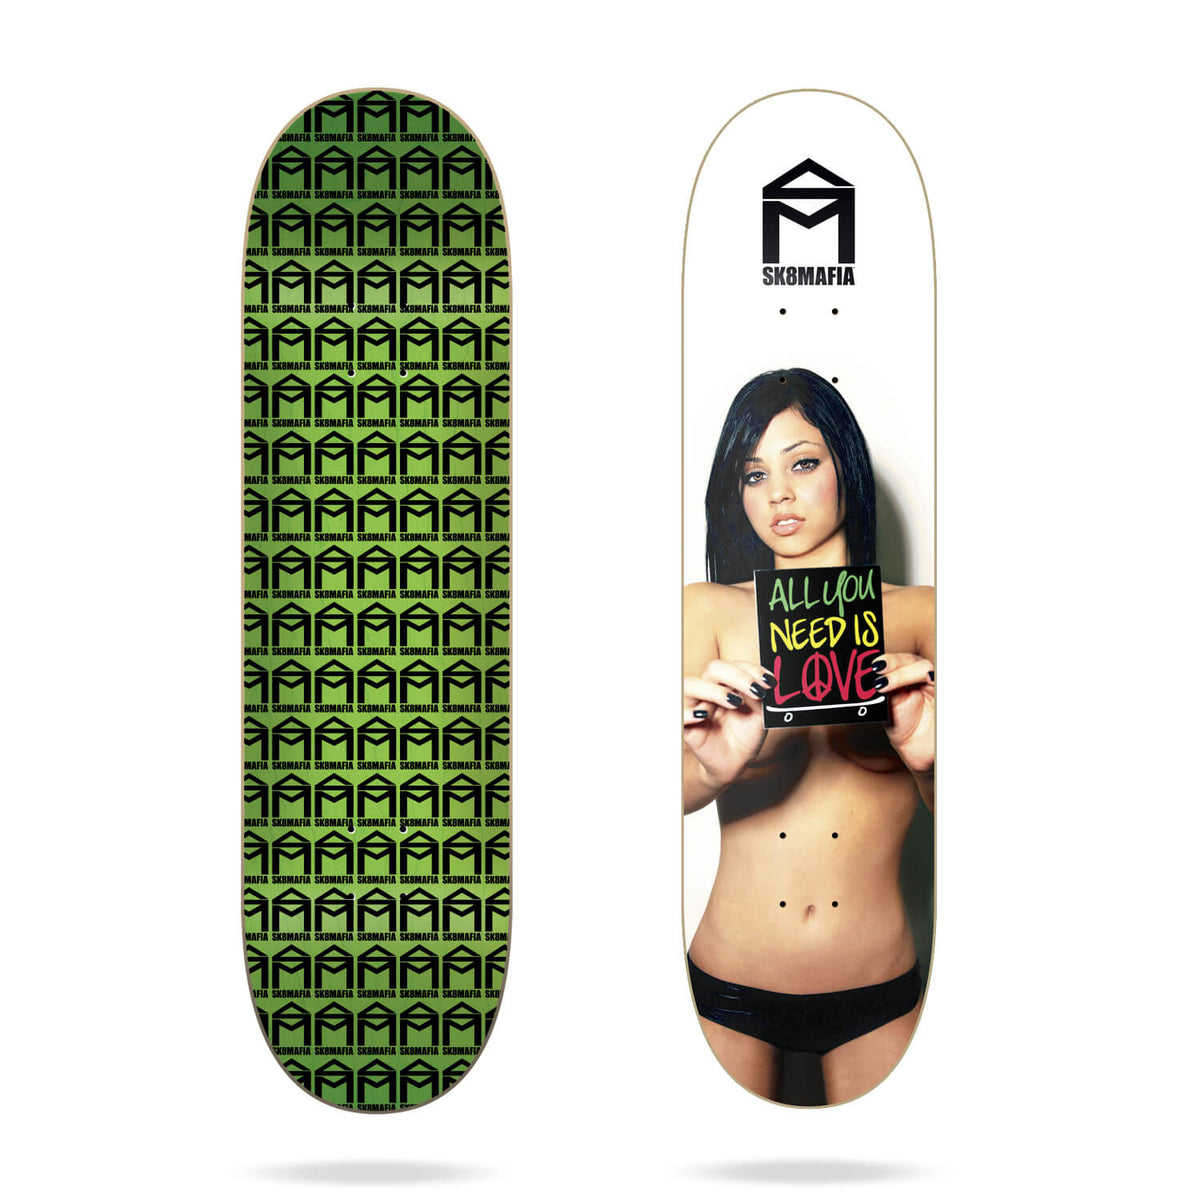 The skateboard deck gets much love with LVSK8 5 - Las Vegas Sun News